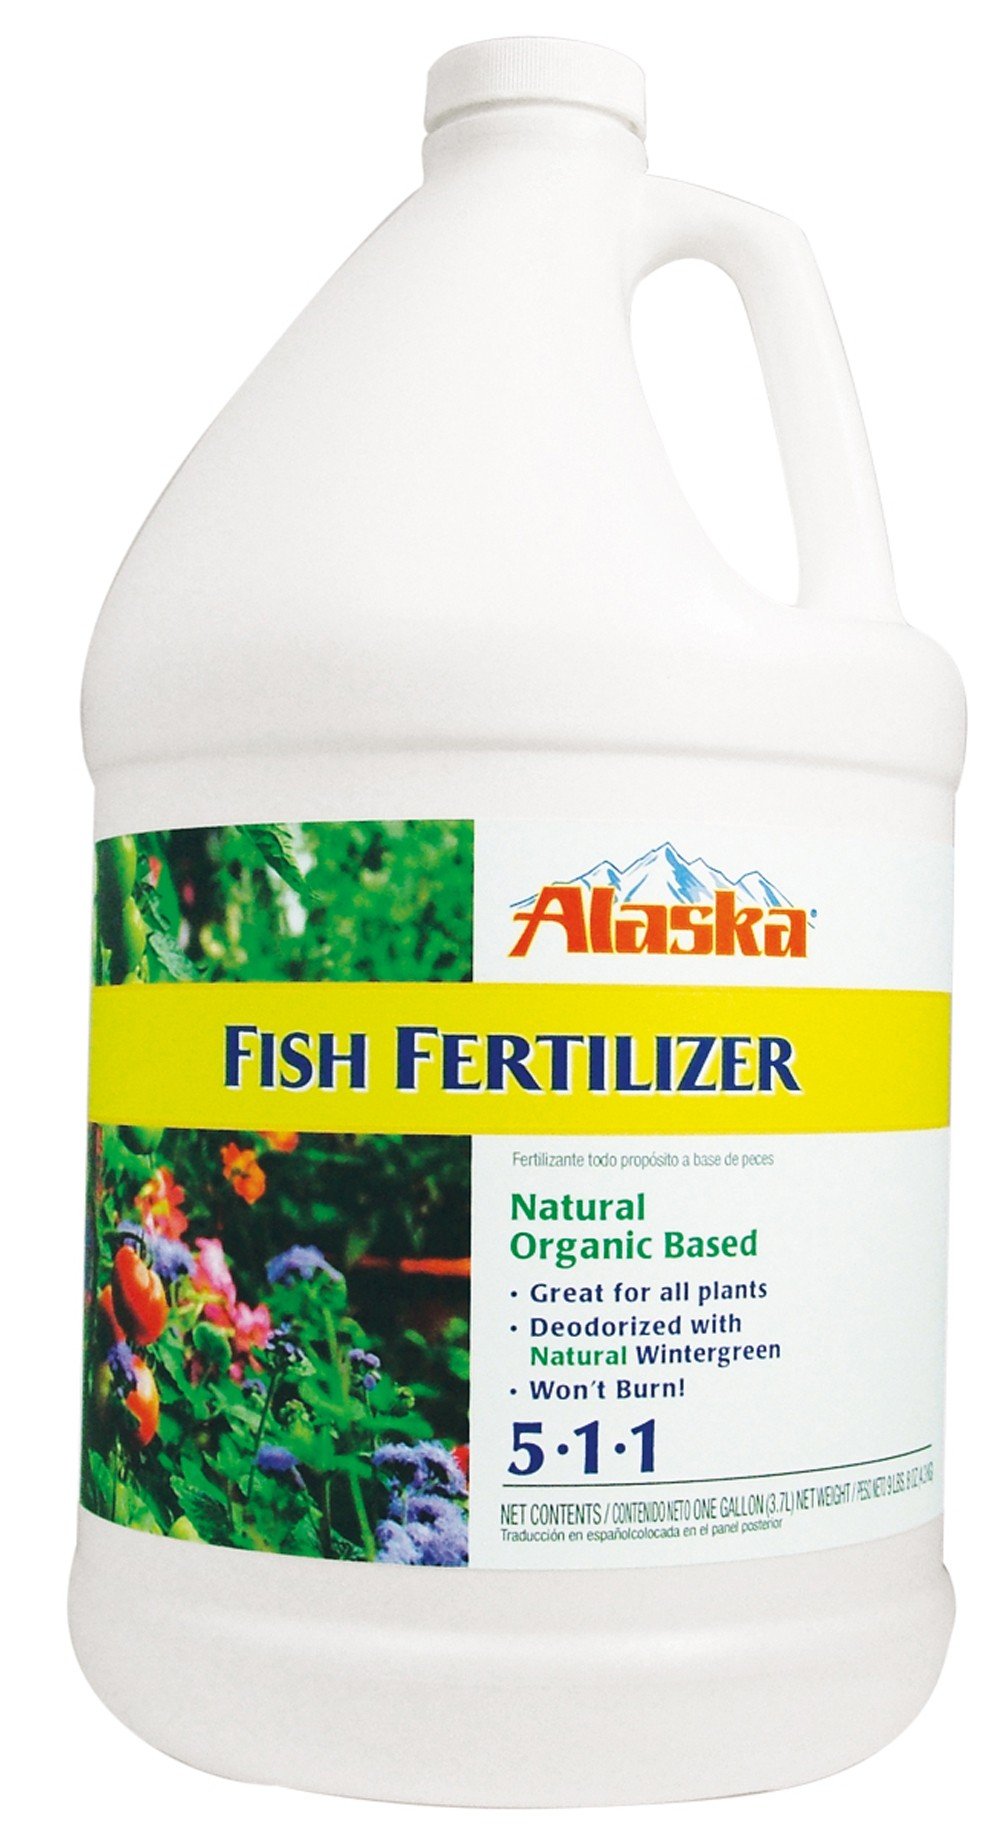 Alaska Fish Emulsion Fertilizer $20.88